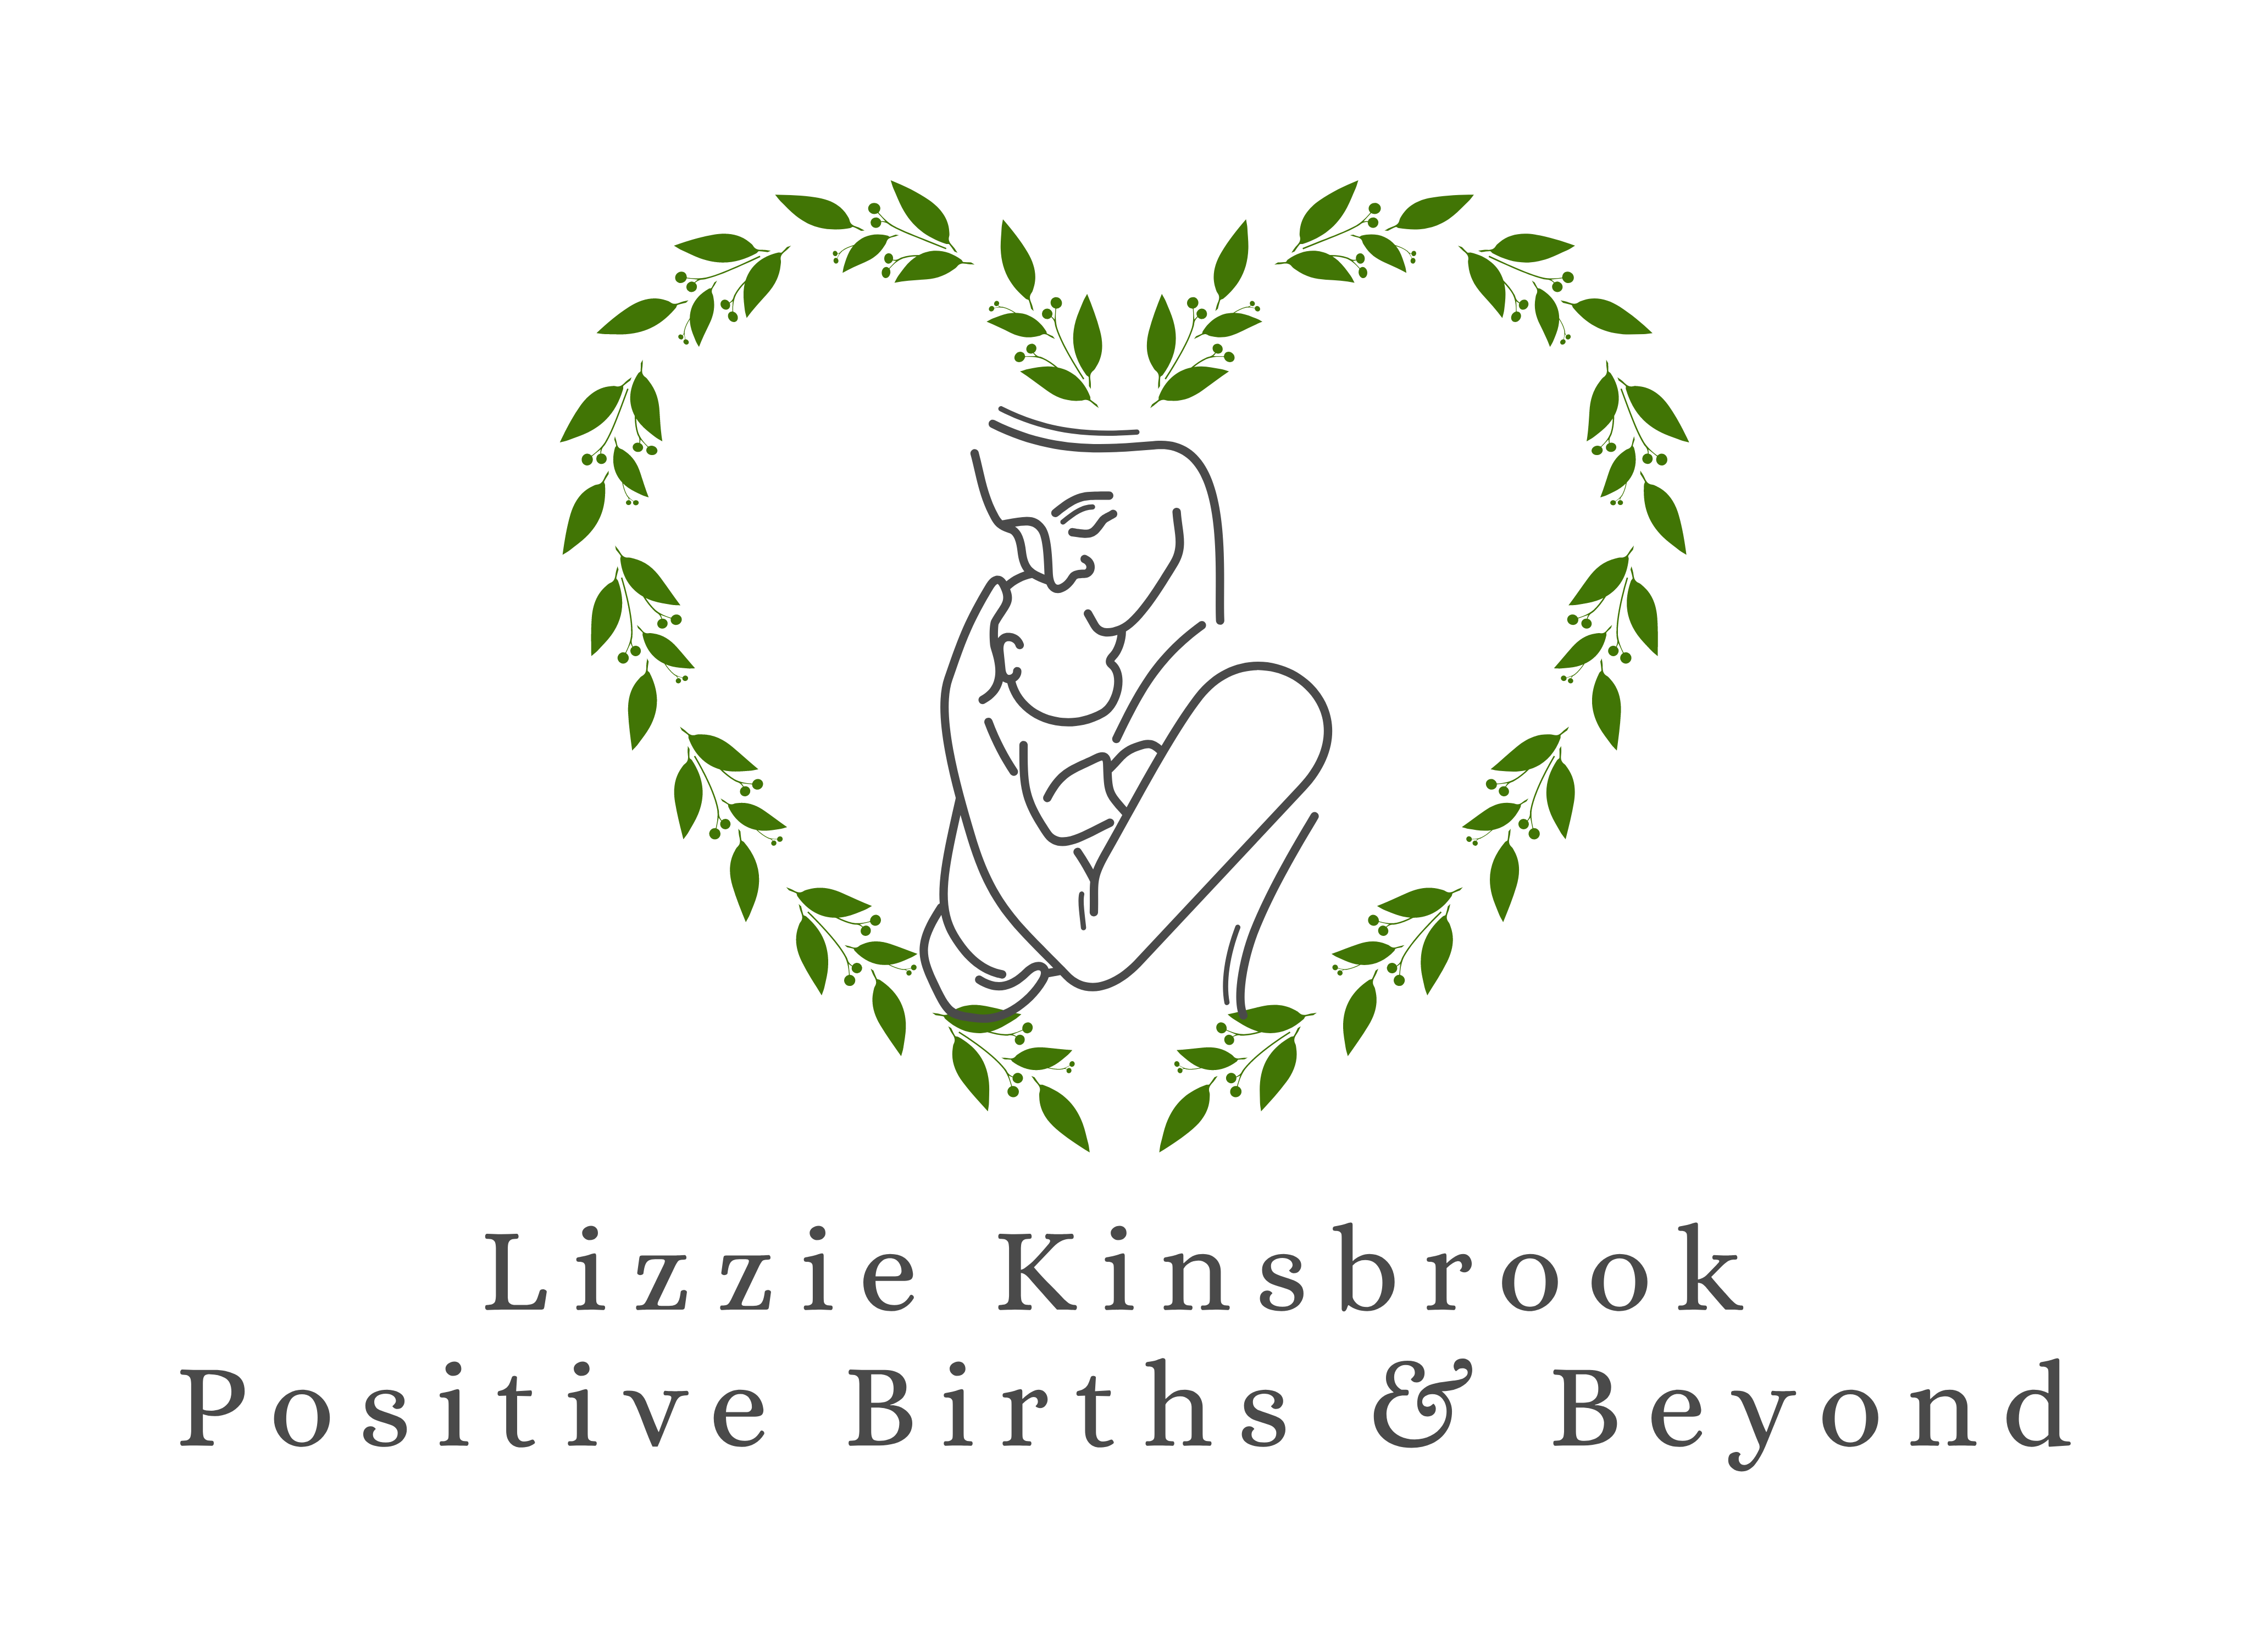 Lizzie Kinsbrook Positive Births & Beyond's logo